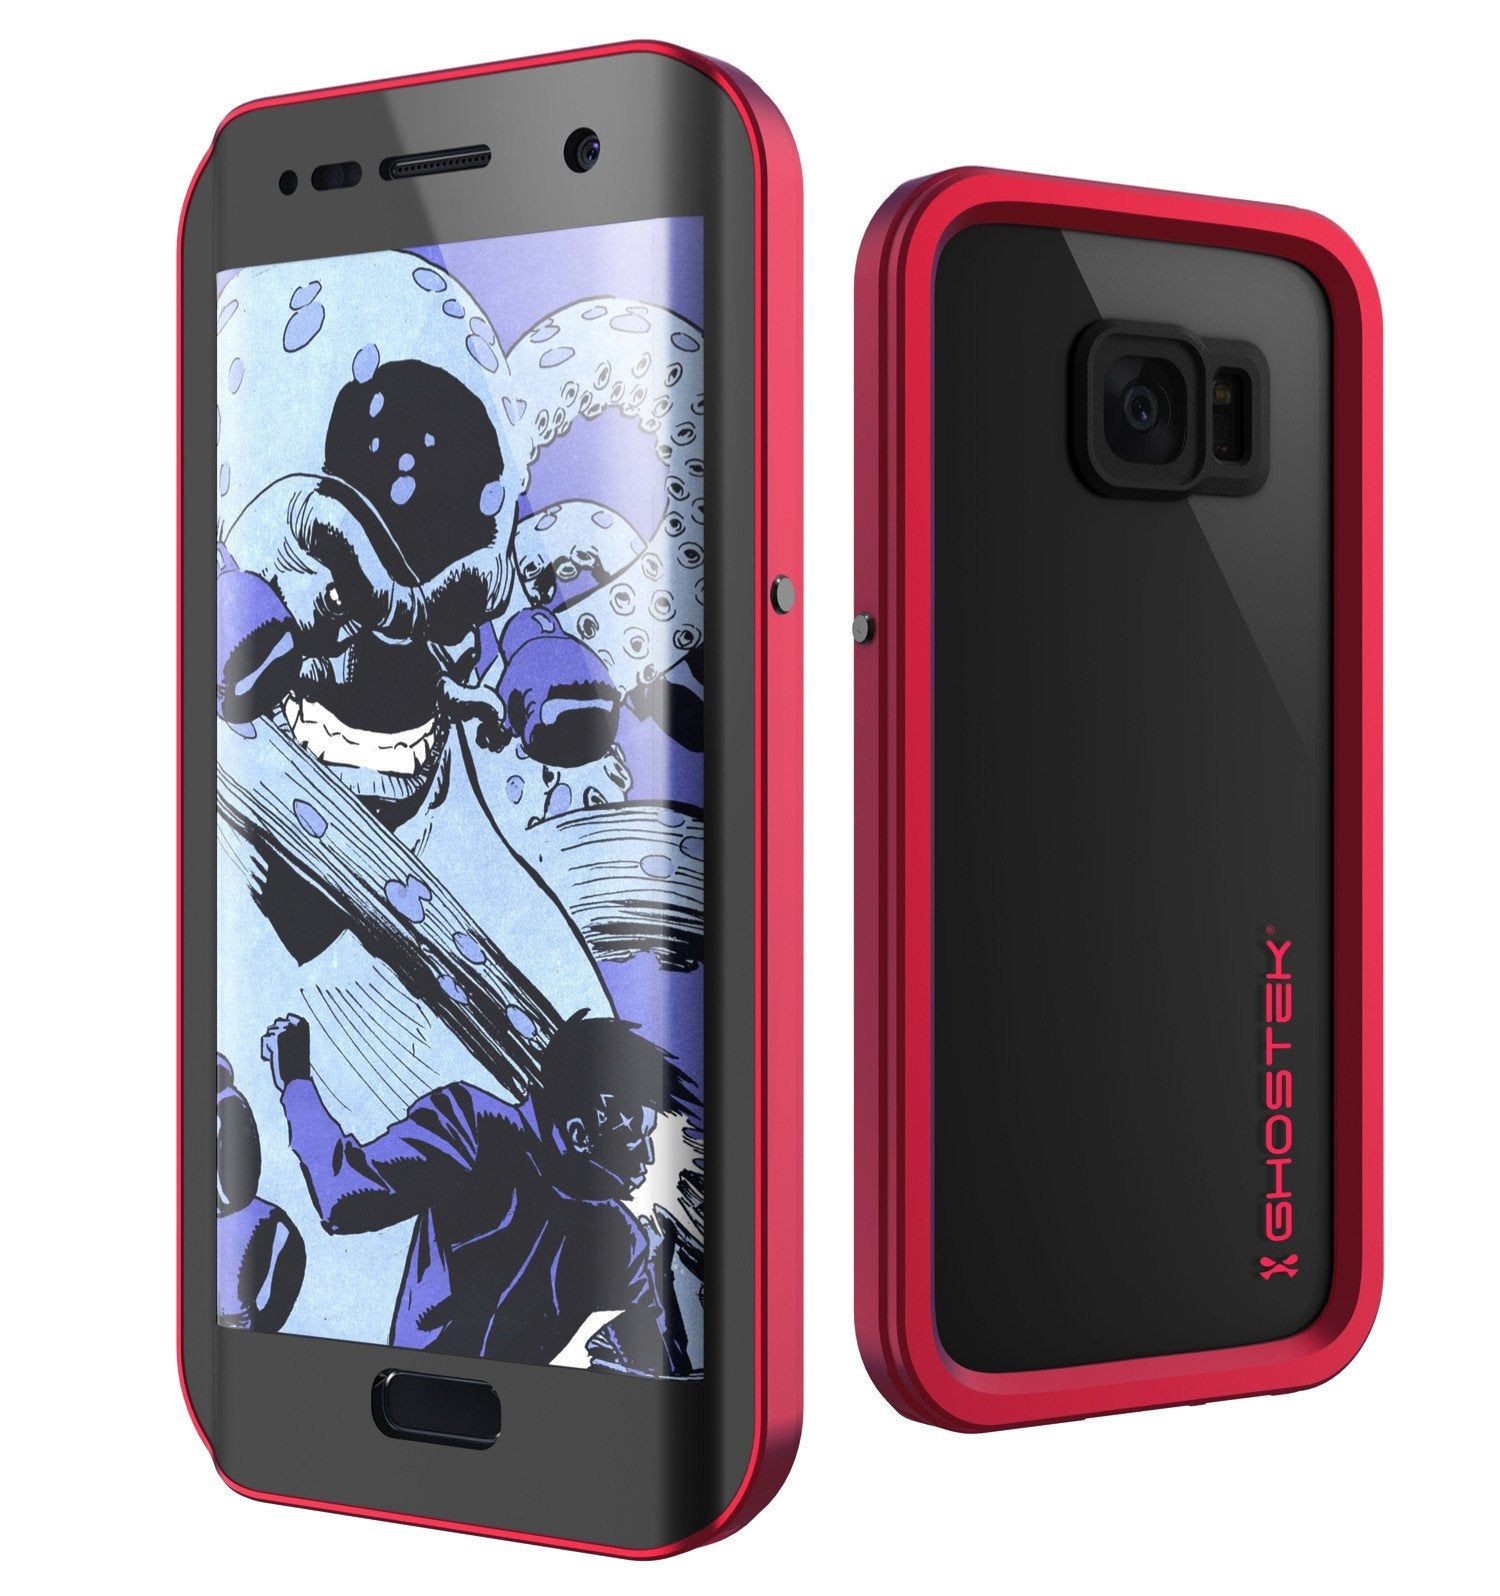 Galaxy S7 EDGE Waterproof Case, Ghostek Atomic 2.0 Red Shock/Dirt/Snow Proof | Lifetime Warranty